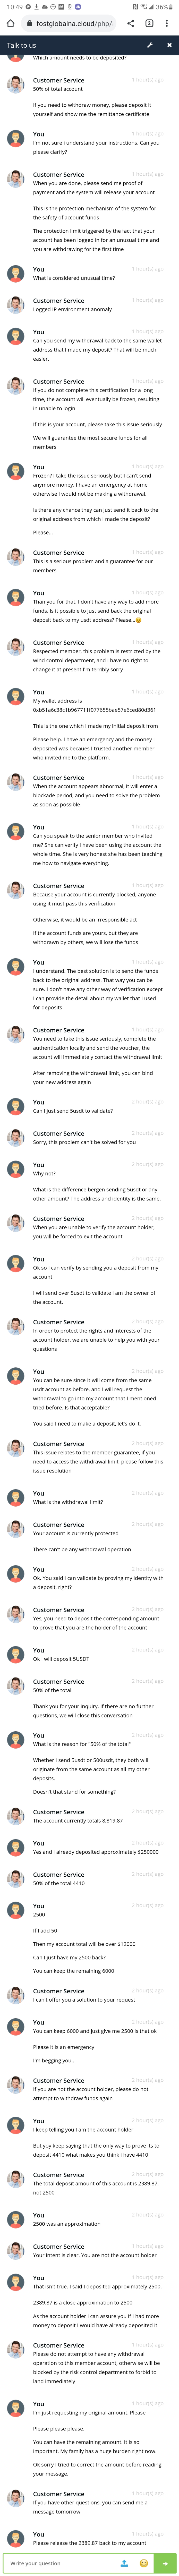 Dialogue customer service 3